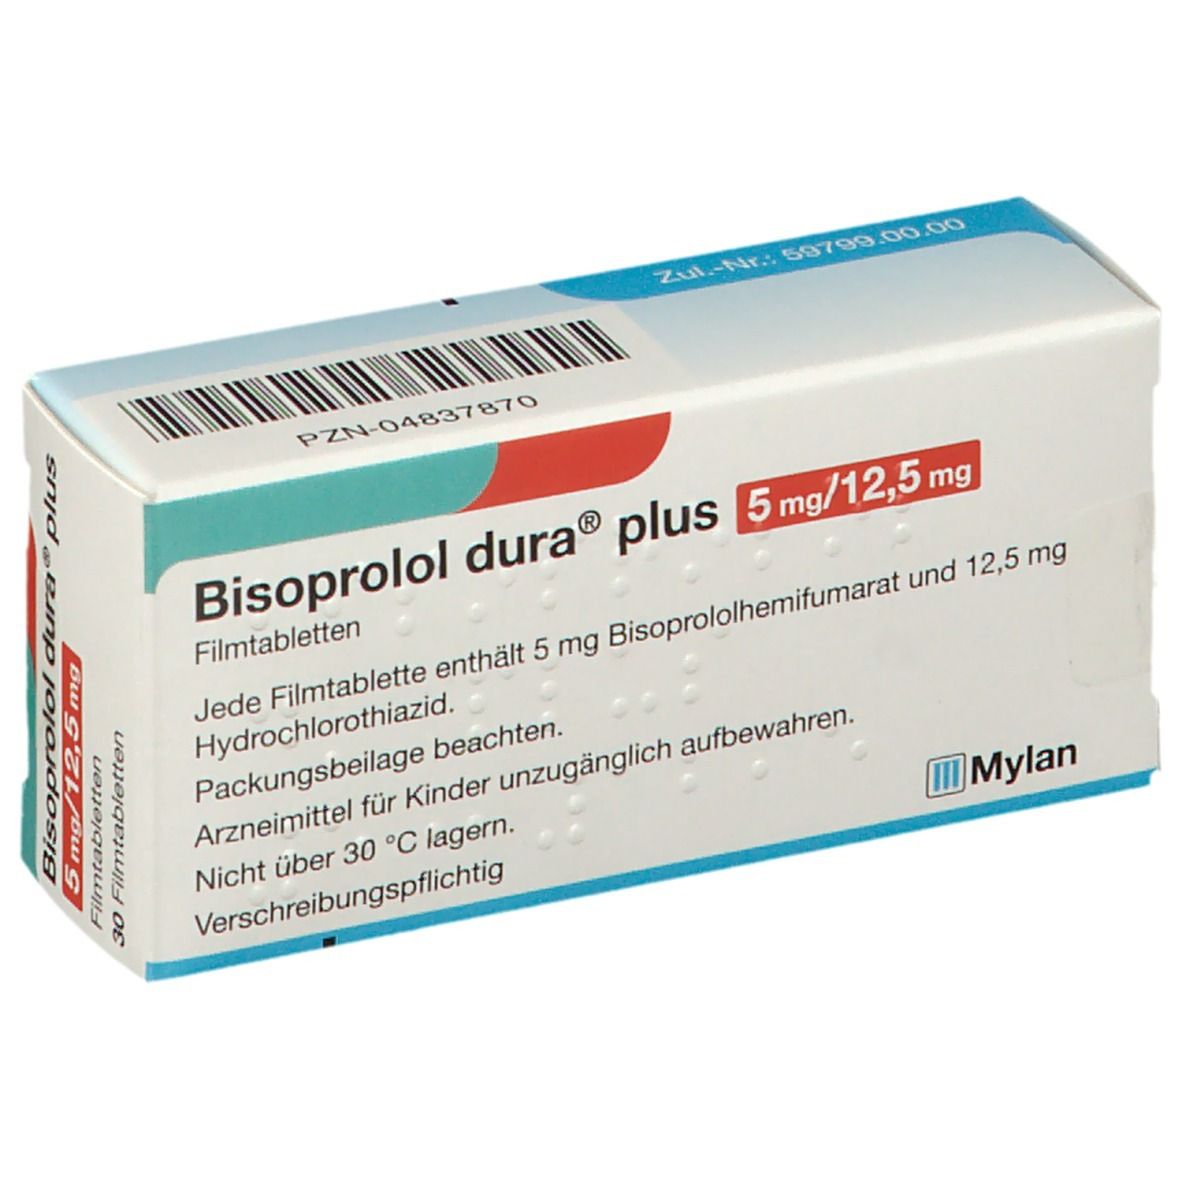 Bisoprolol dura® plus 5 mg/12,5 mg